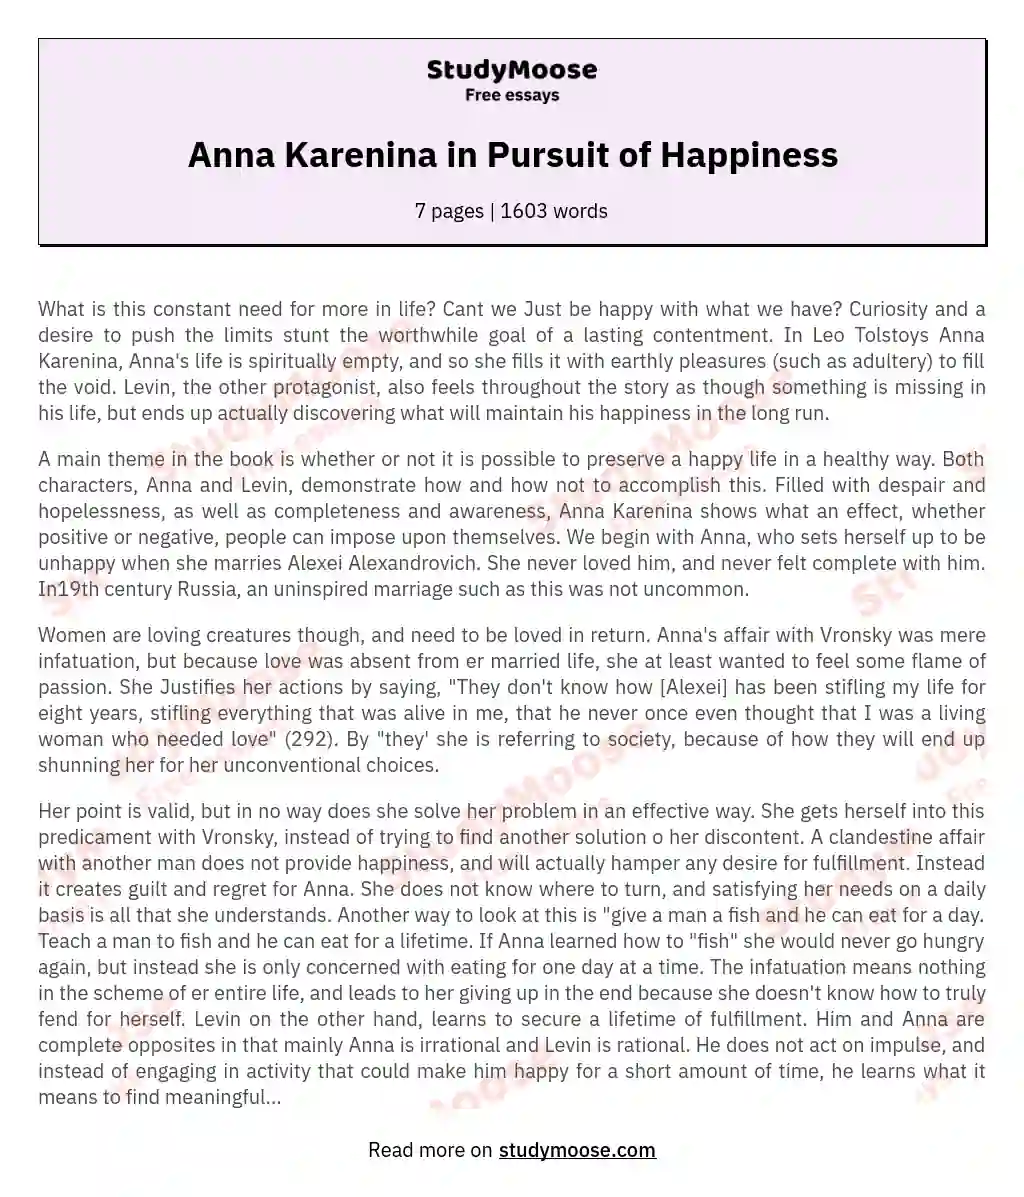 Anna Karenina in Pursuit of Happiness